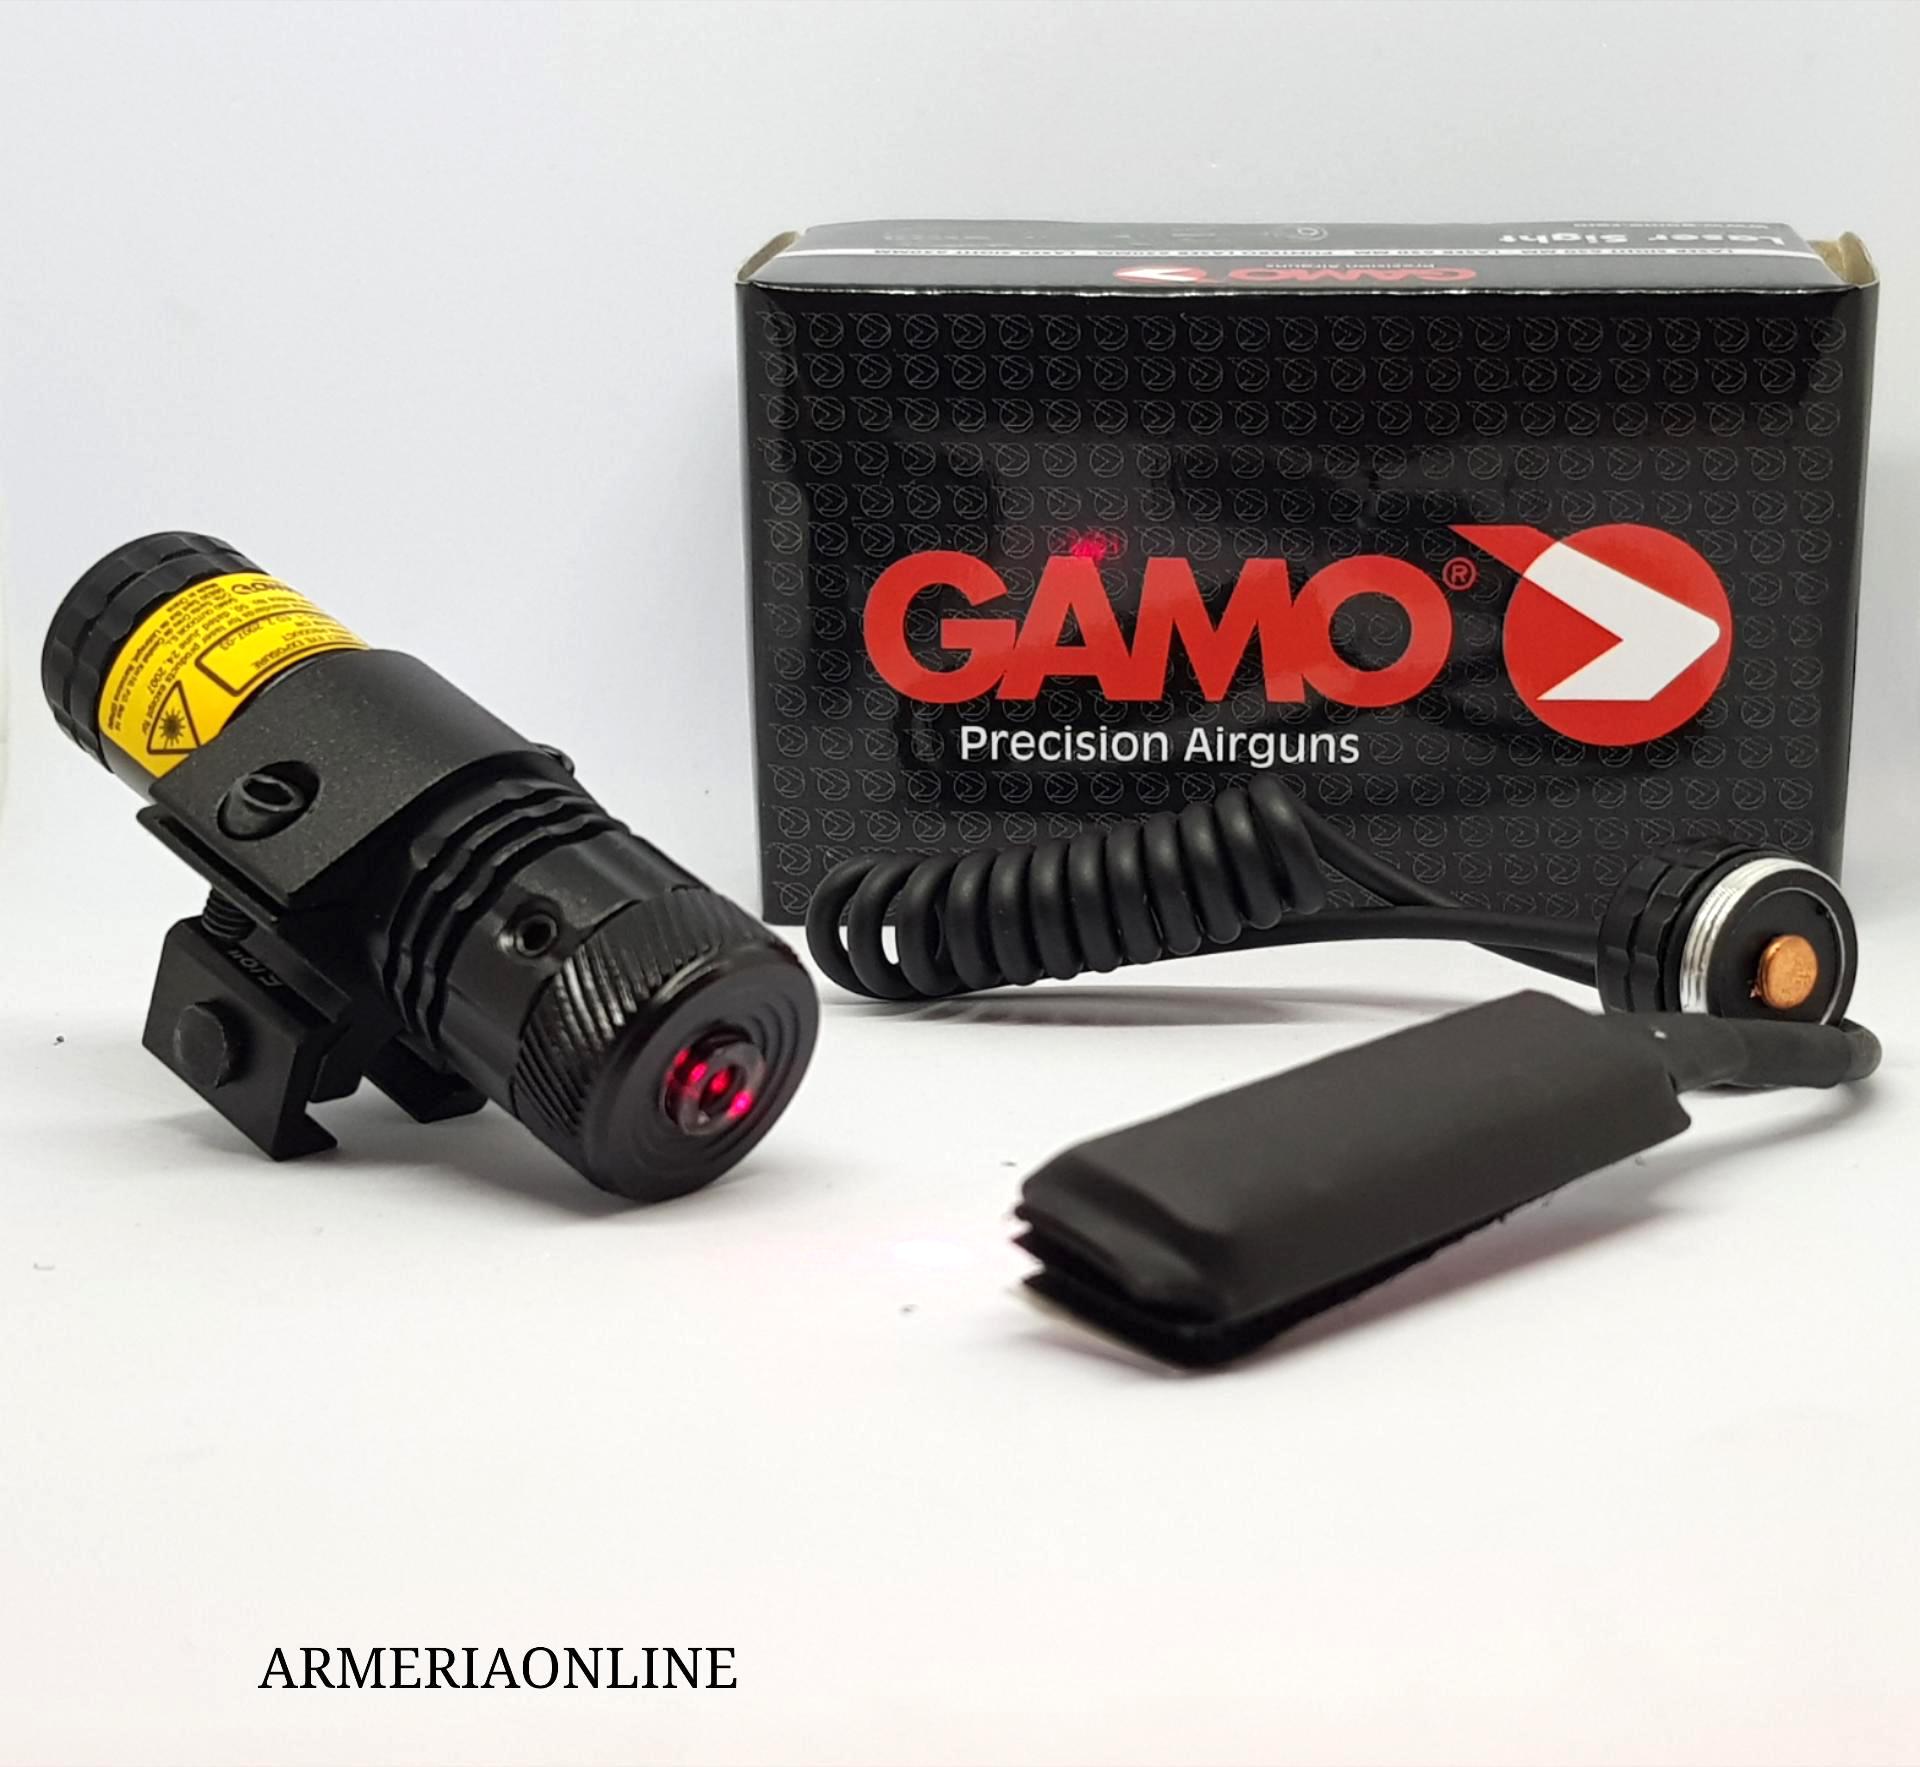 Laser rosso per pistola co2 softair fucile carabina Mirino puntatore G